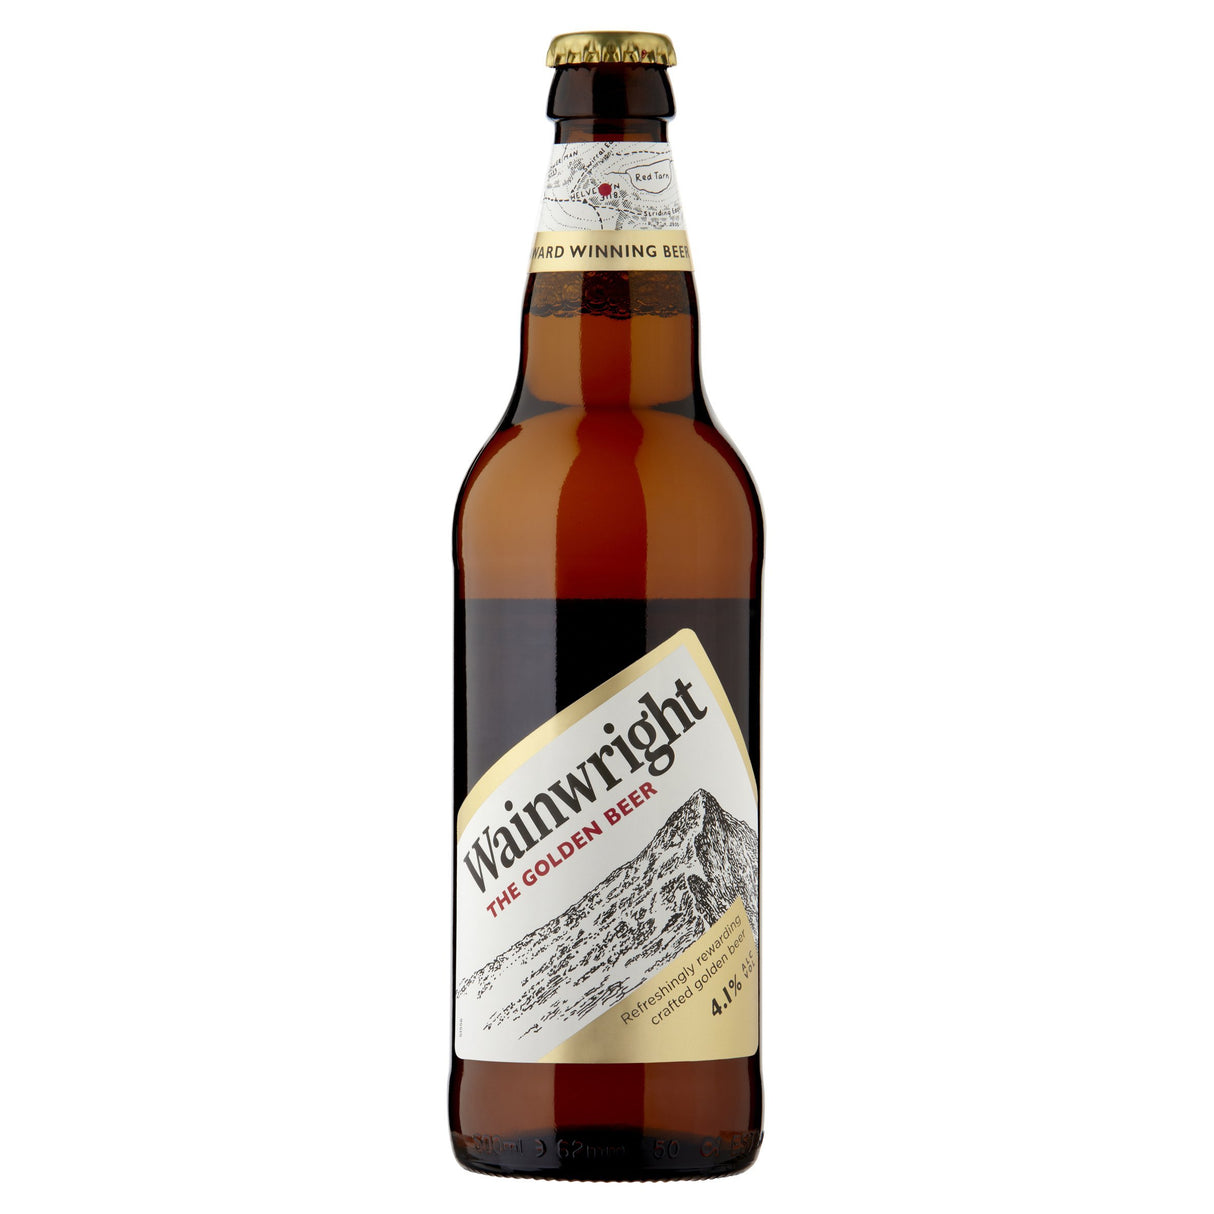 Wainwright Golden Ale 500ml